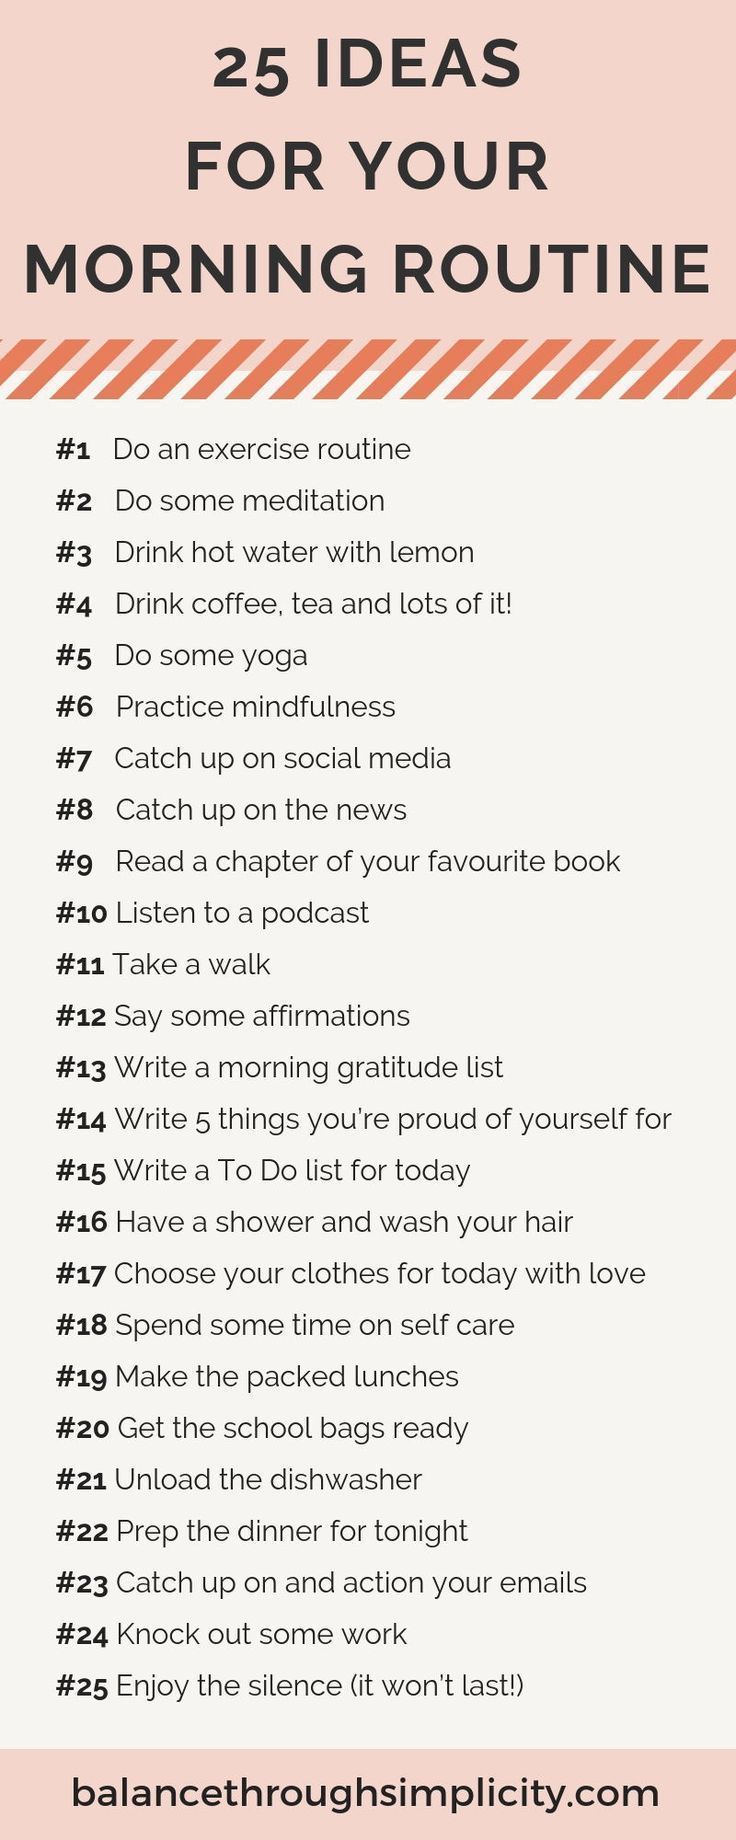 18 beauty Routines checklist ideas